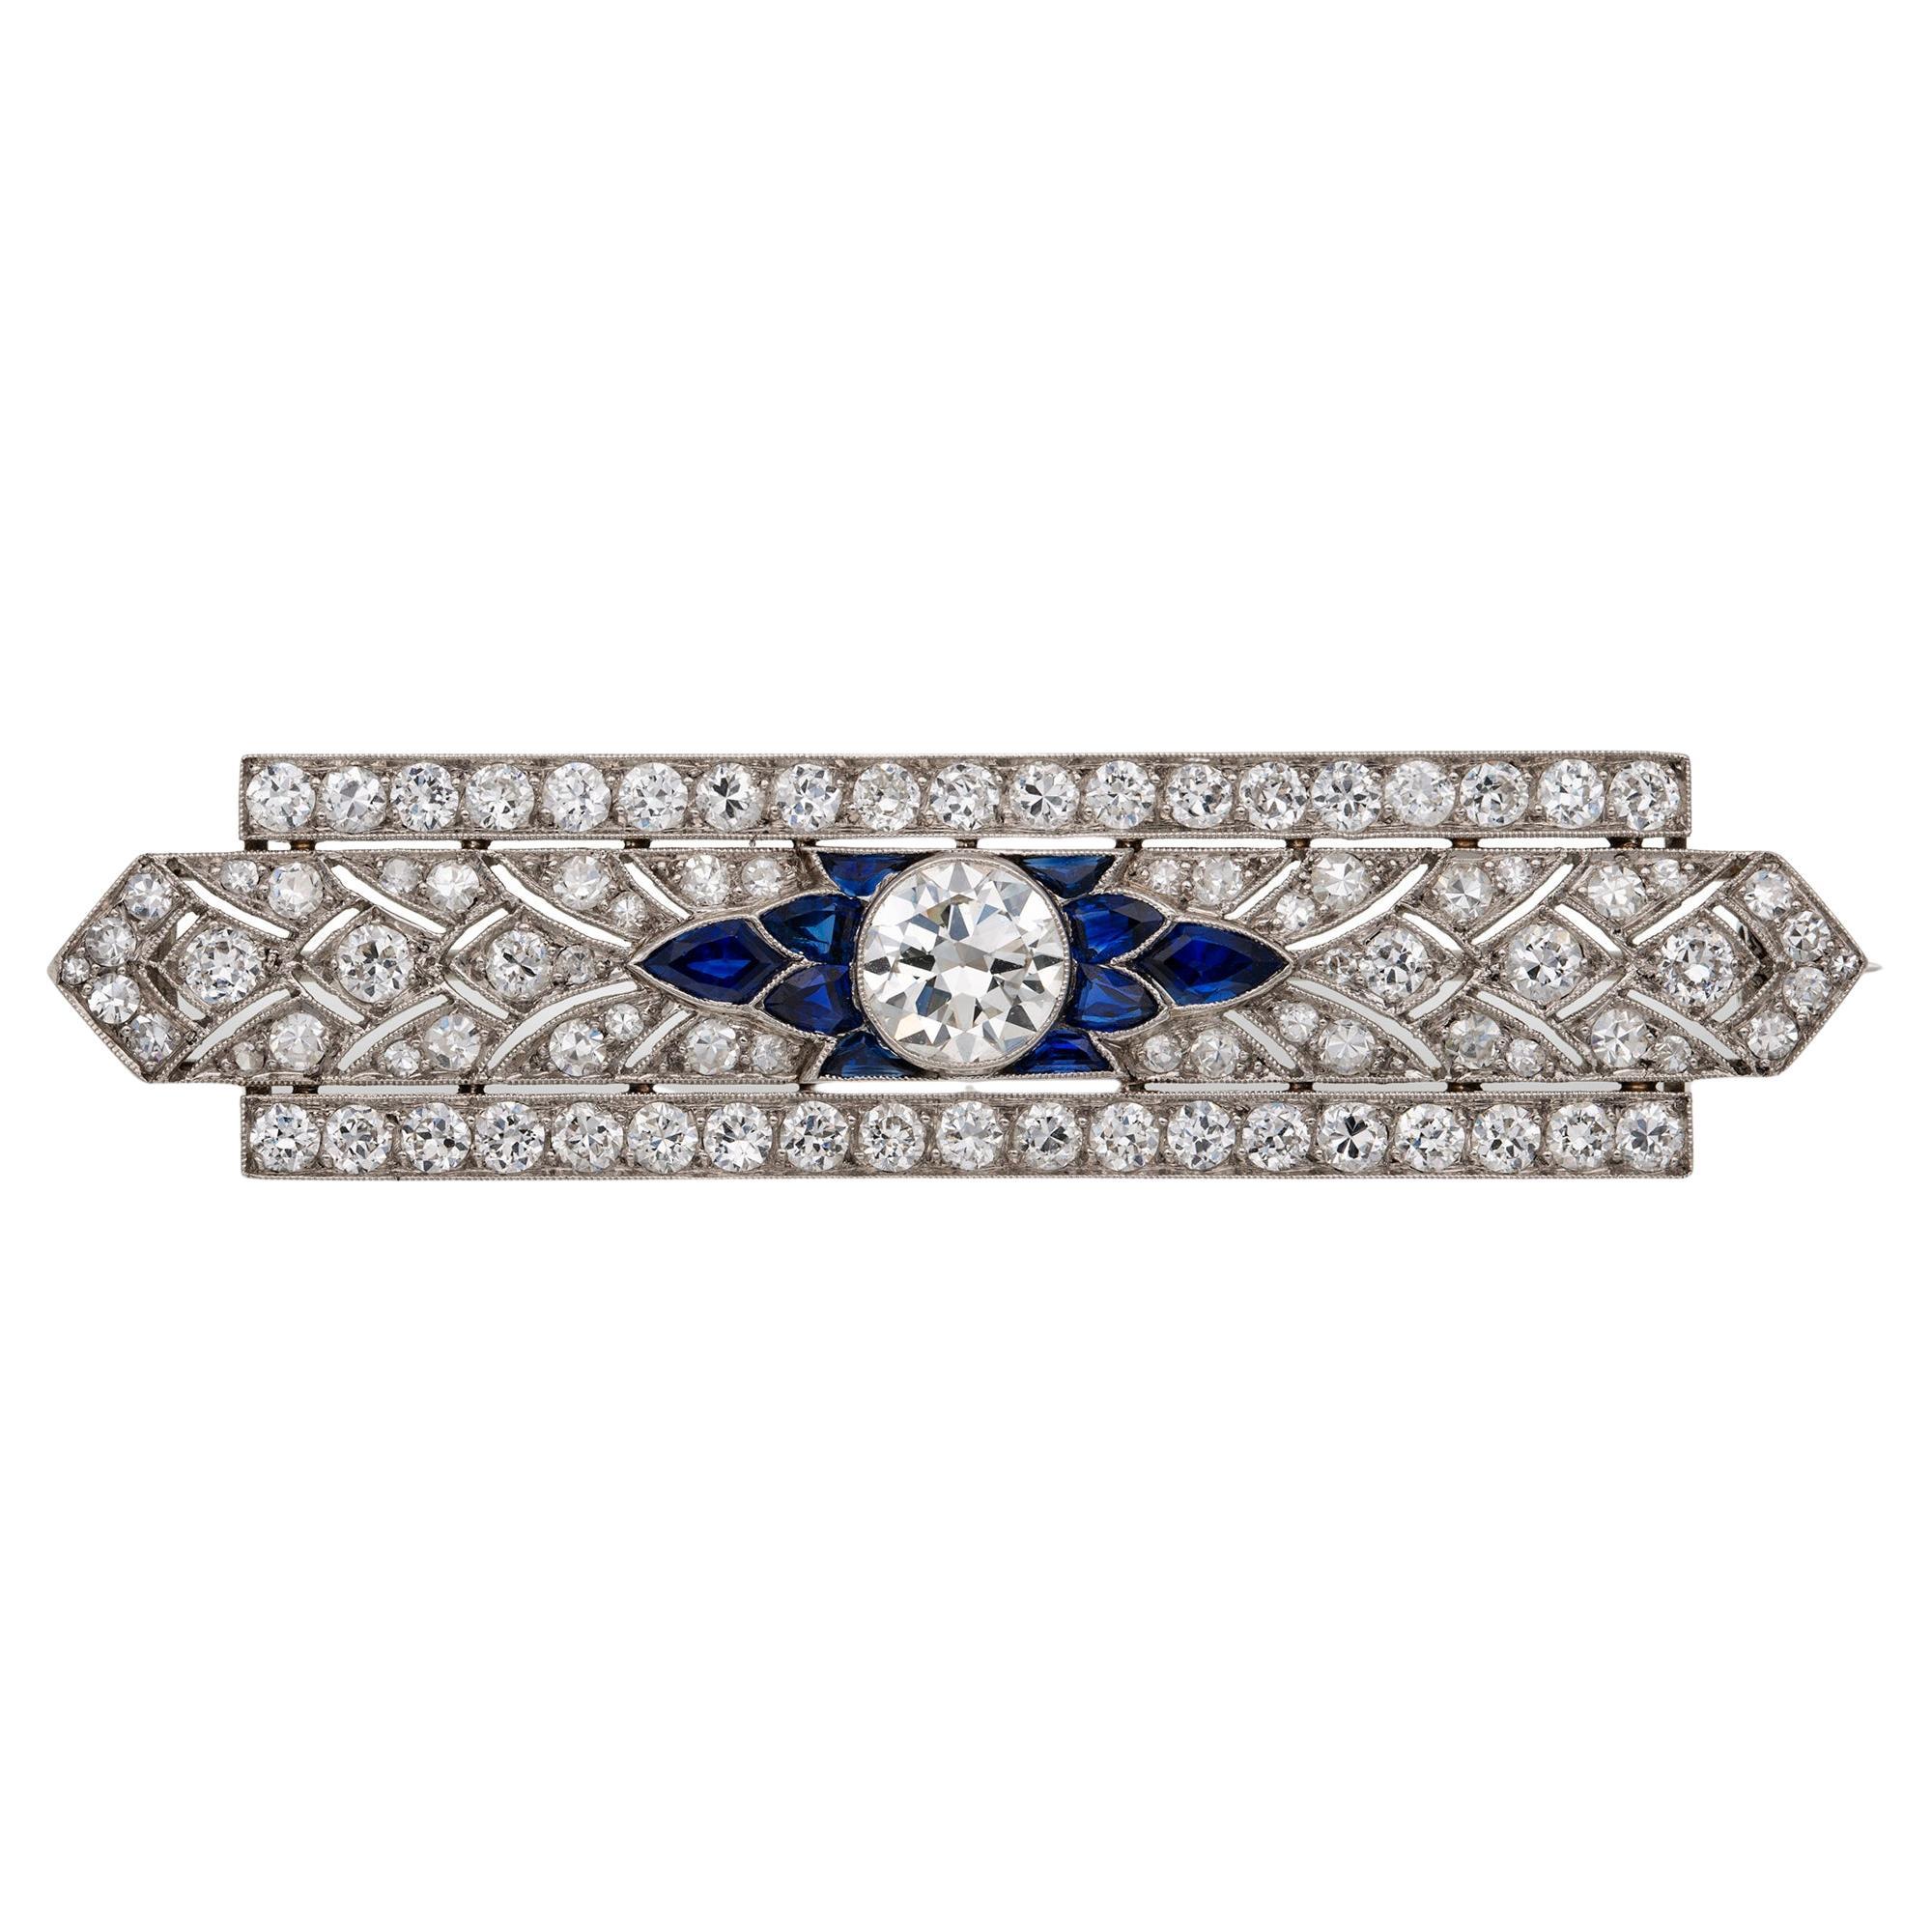 A Fine Art Deco Diamond And Sapphire Bar Brooch